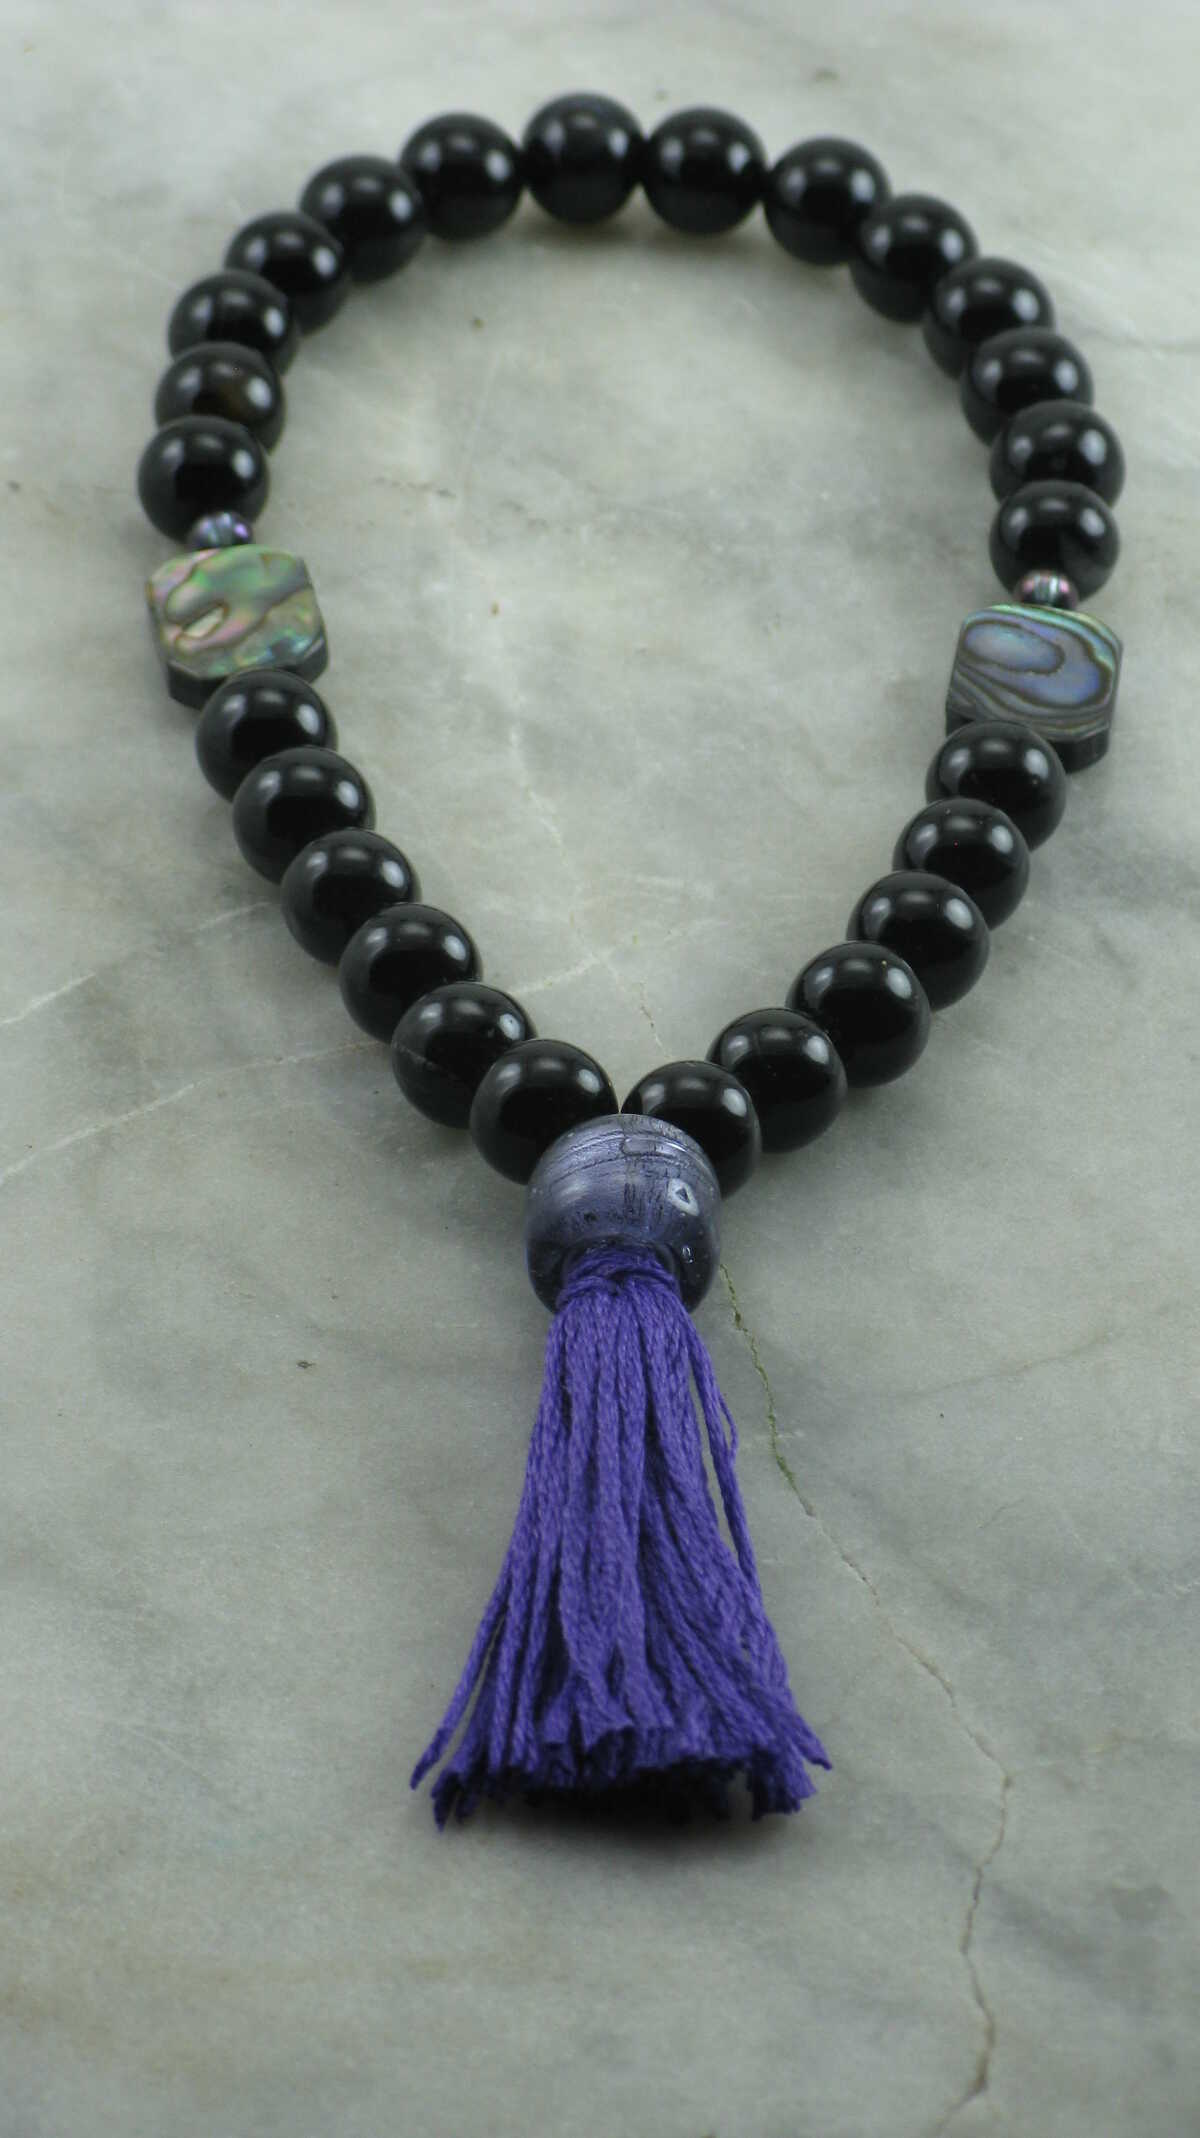 https://saltspringmalas.com/wp-content/uploads/2012/09/Strength_Mala_Bracelet_27_Mala_Beads_Buddhist_Bracelet.jpg